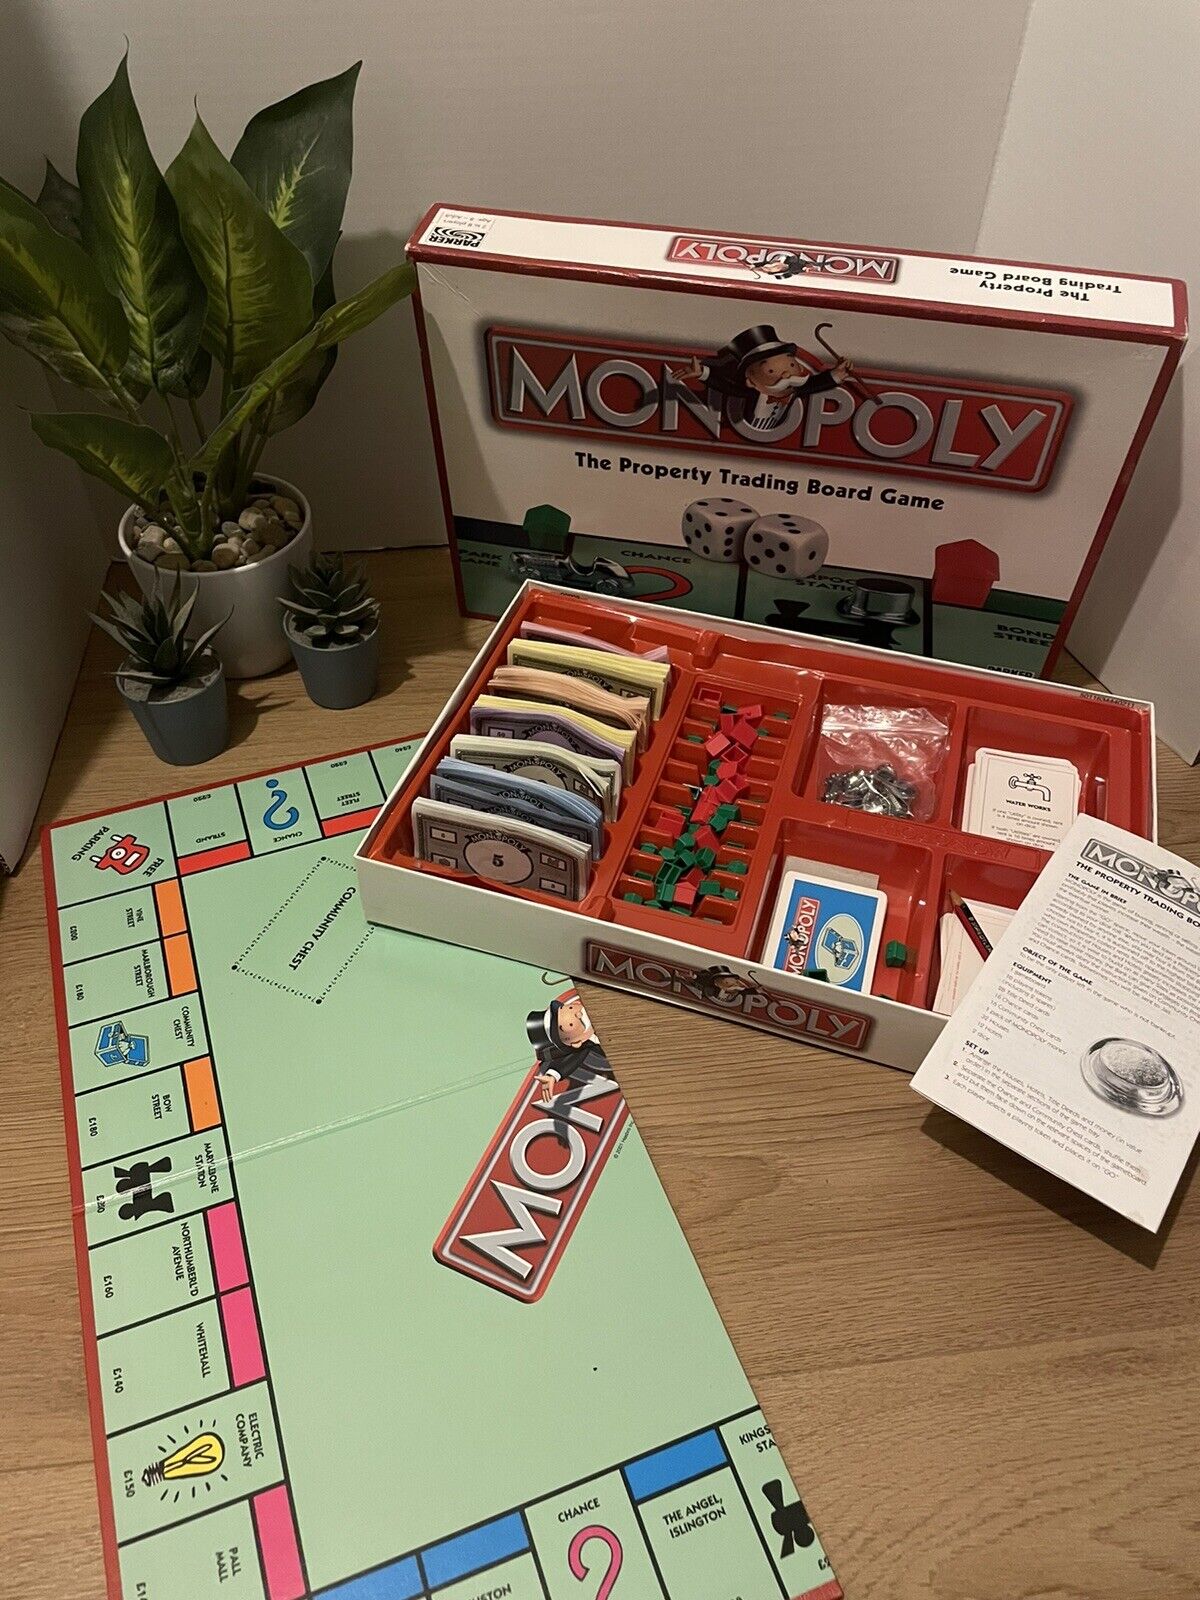 original monopoly board image